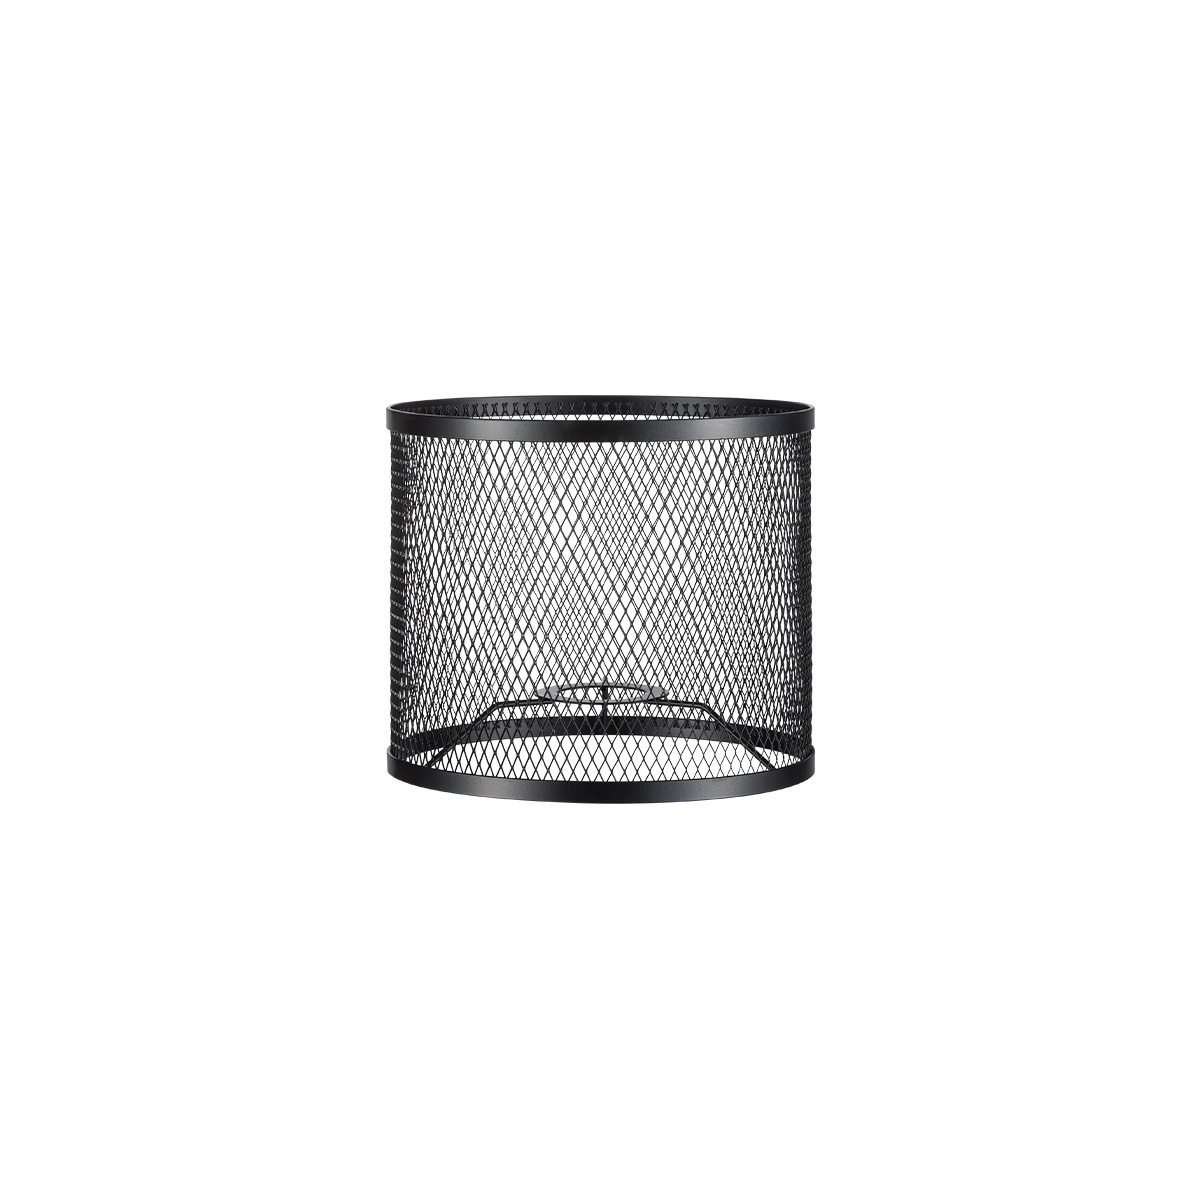 Tangla lighting - TLS7646-20BK - Decorative Lampshade - metal wire mesh in black - industrial black - Φ20cm - E27